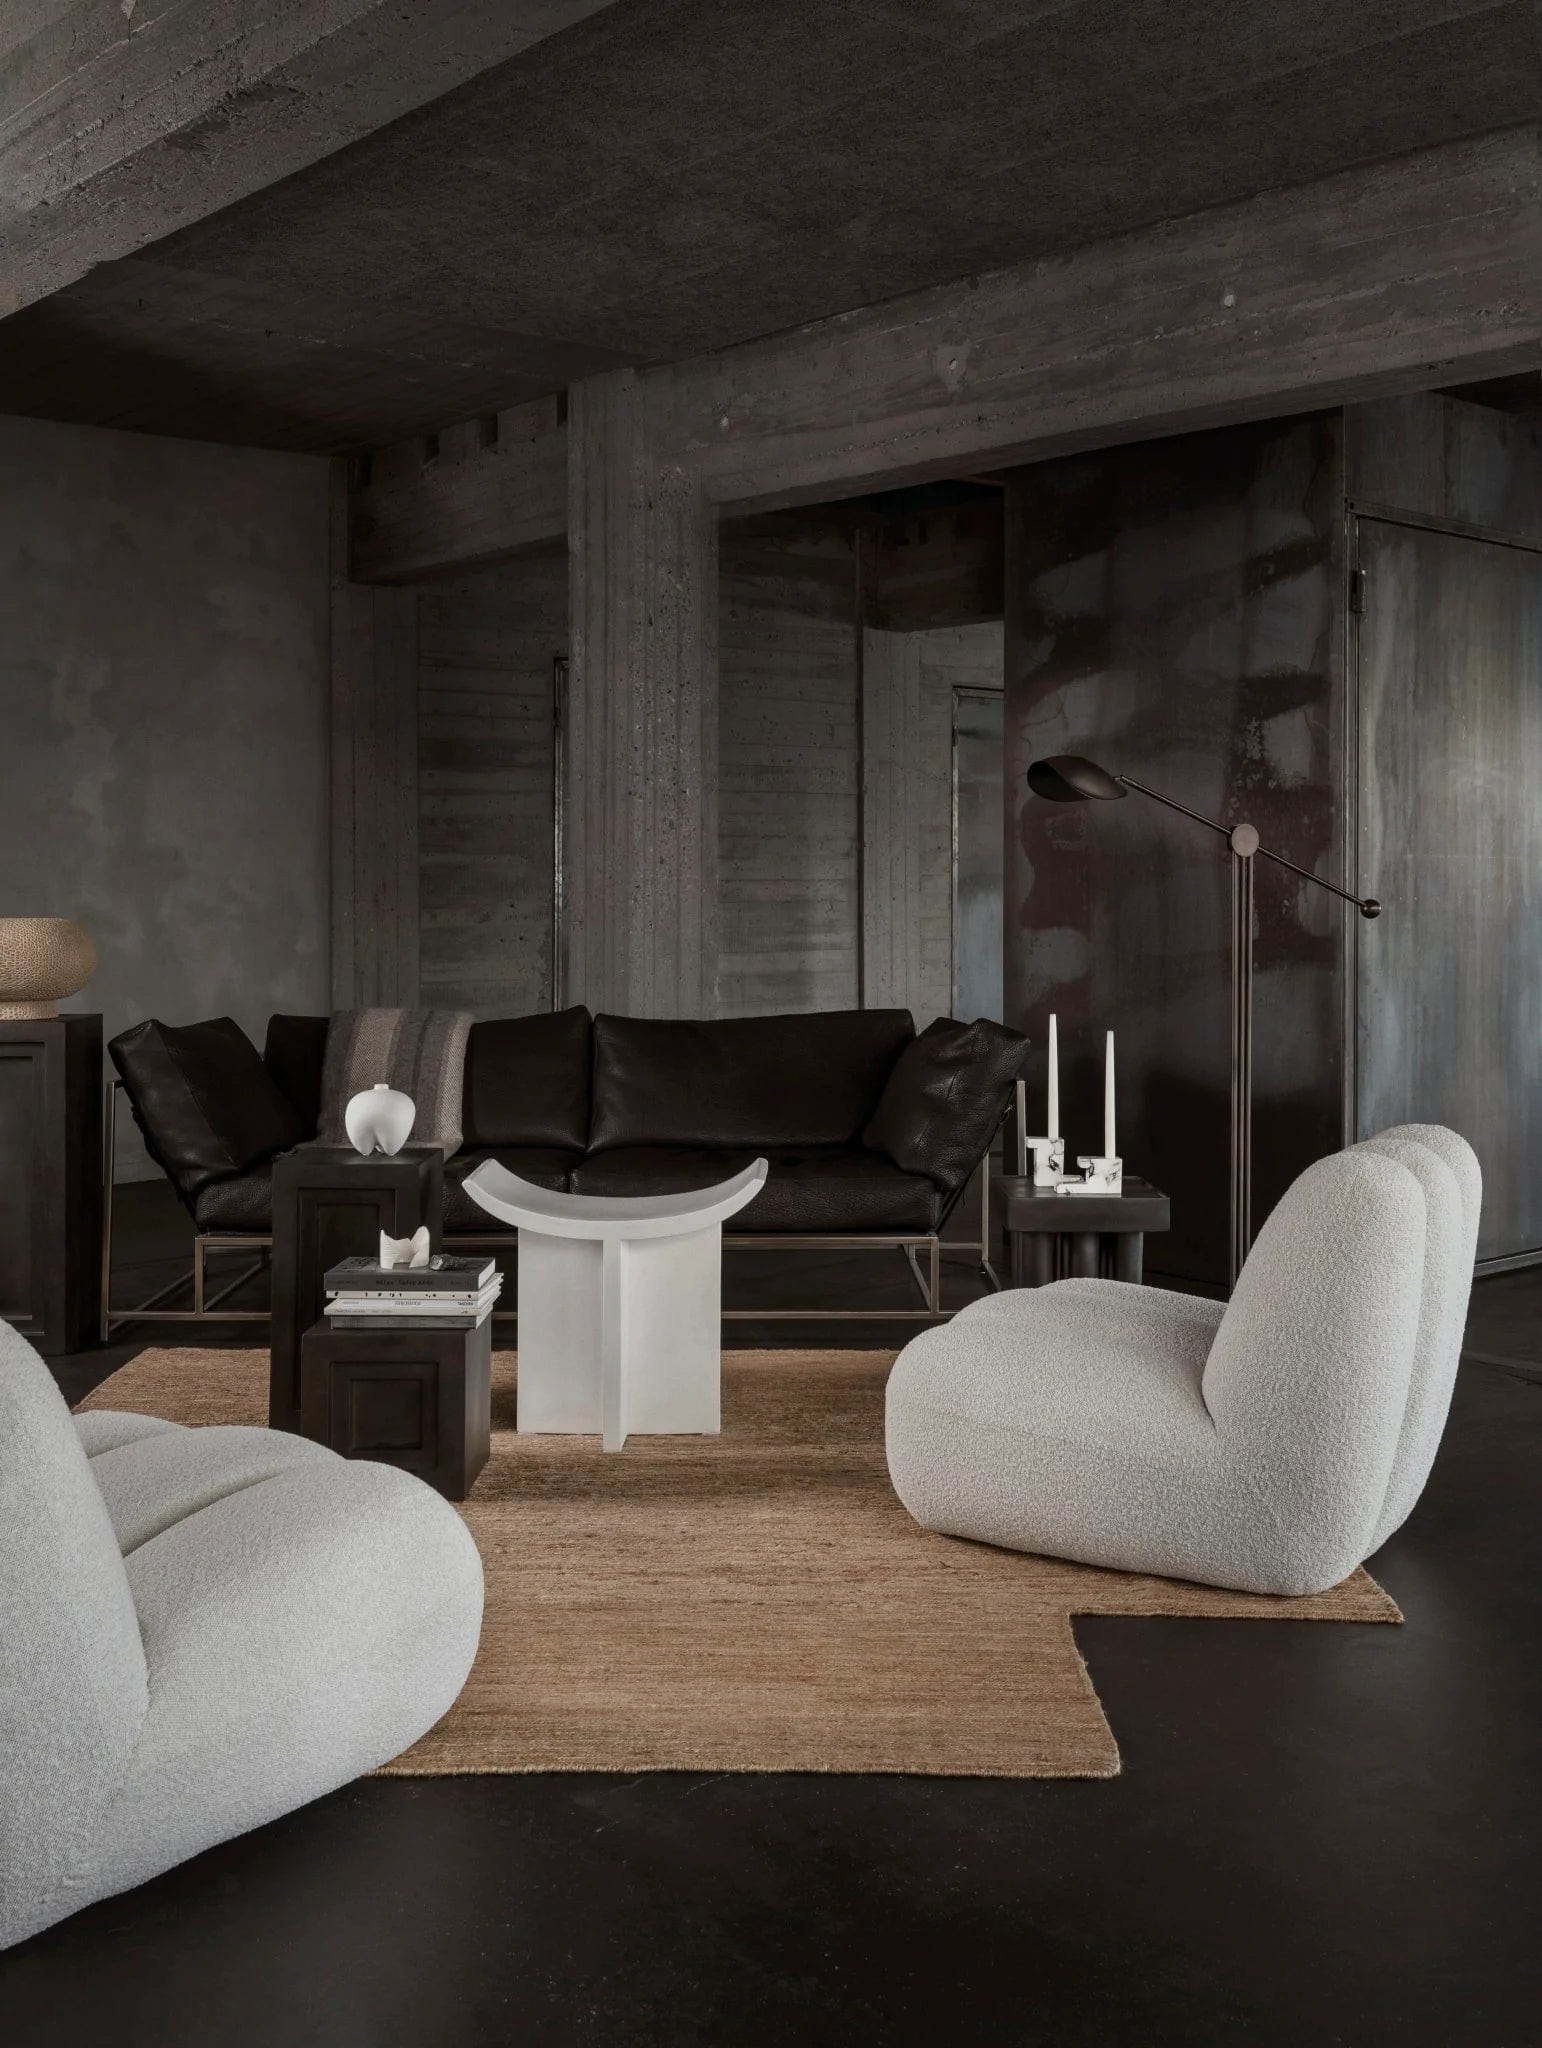 101 COPENHAGEN Πολυθρόνα Πολυθρόνα Toe Chair Λευκή Μπουκλέ/Σανέλ (Bouclé) L70xW80xH72 cm 101 COPENHAGEN